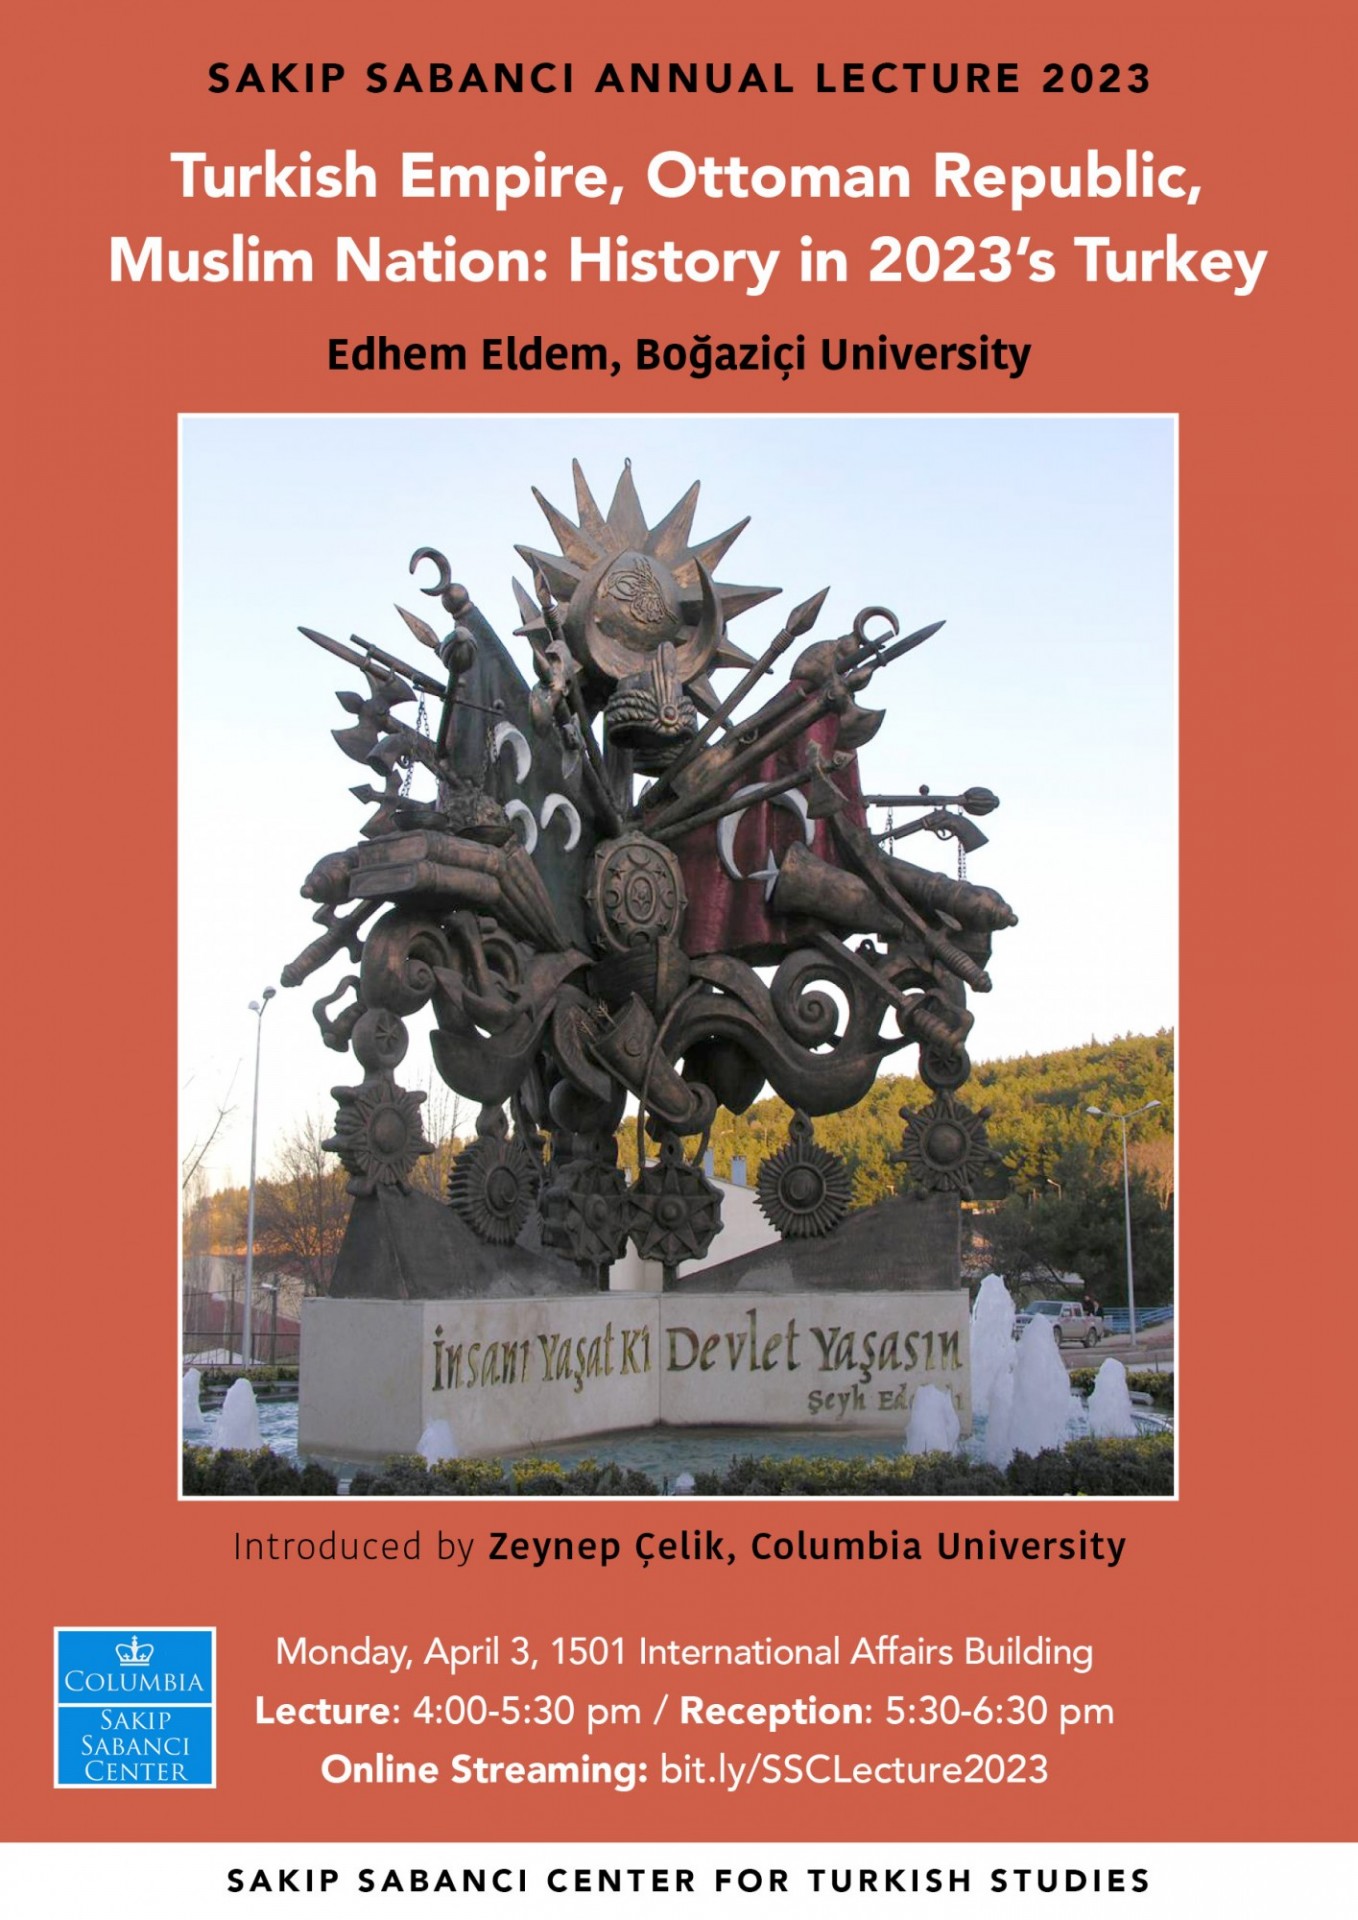 TurkishEmpire,OttomanRepublic,MuslimNation History in 2023s Turkey Sakıp Sabancı Center for Turkish Studies